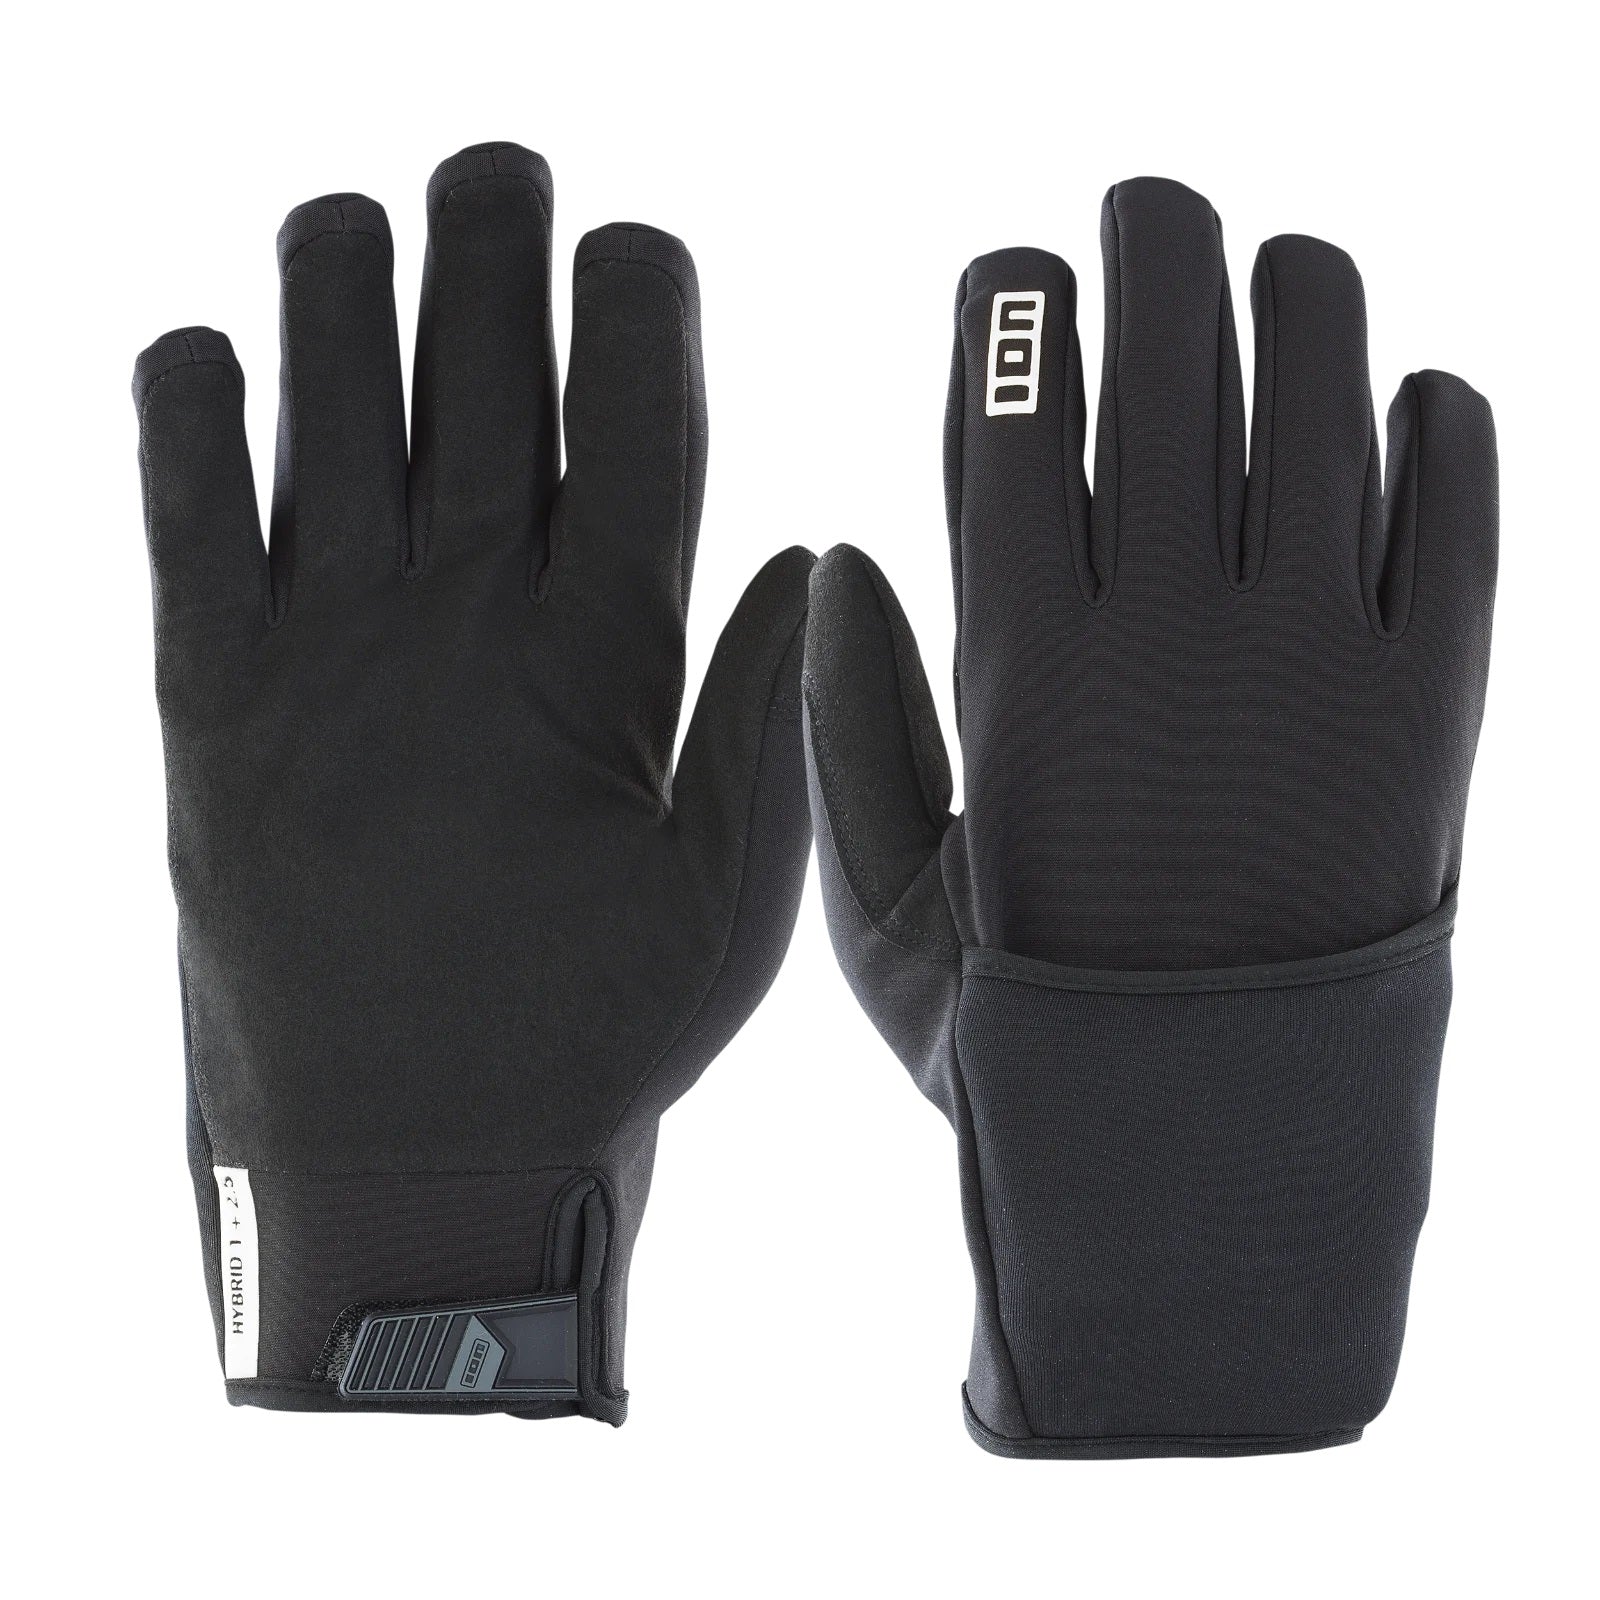 ION Water Gloves Hybrid 1+2.5 unisex – Neopren Handschuhe